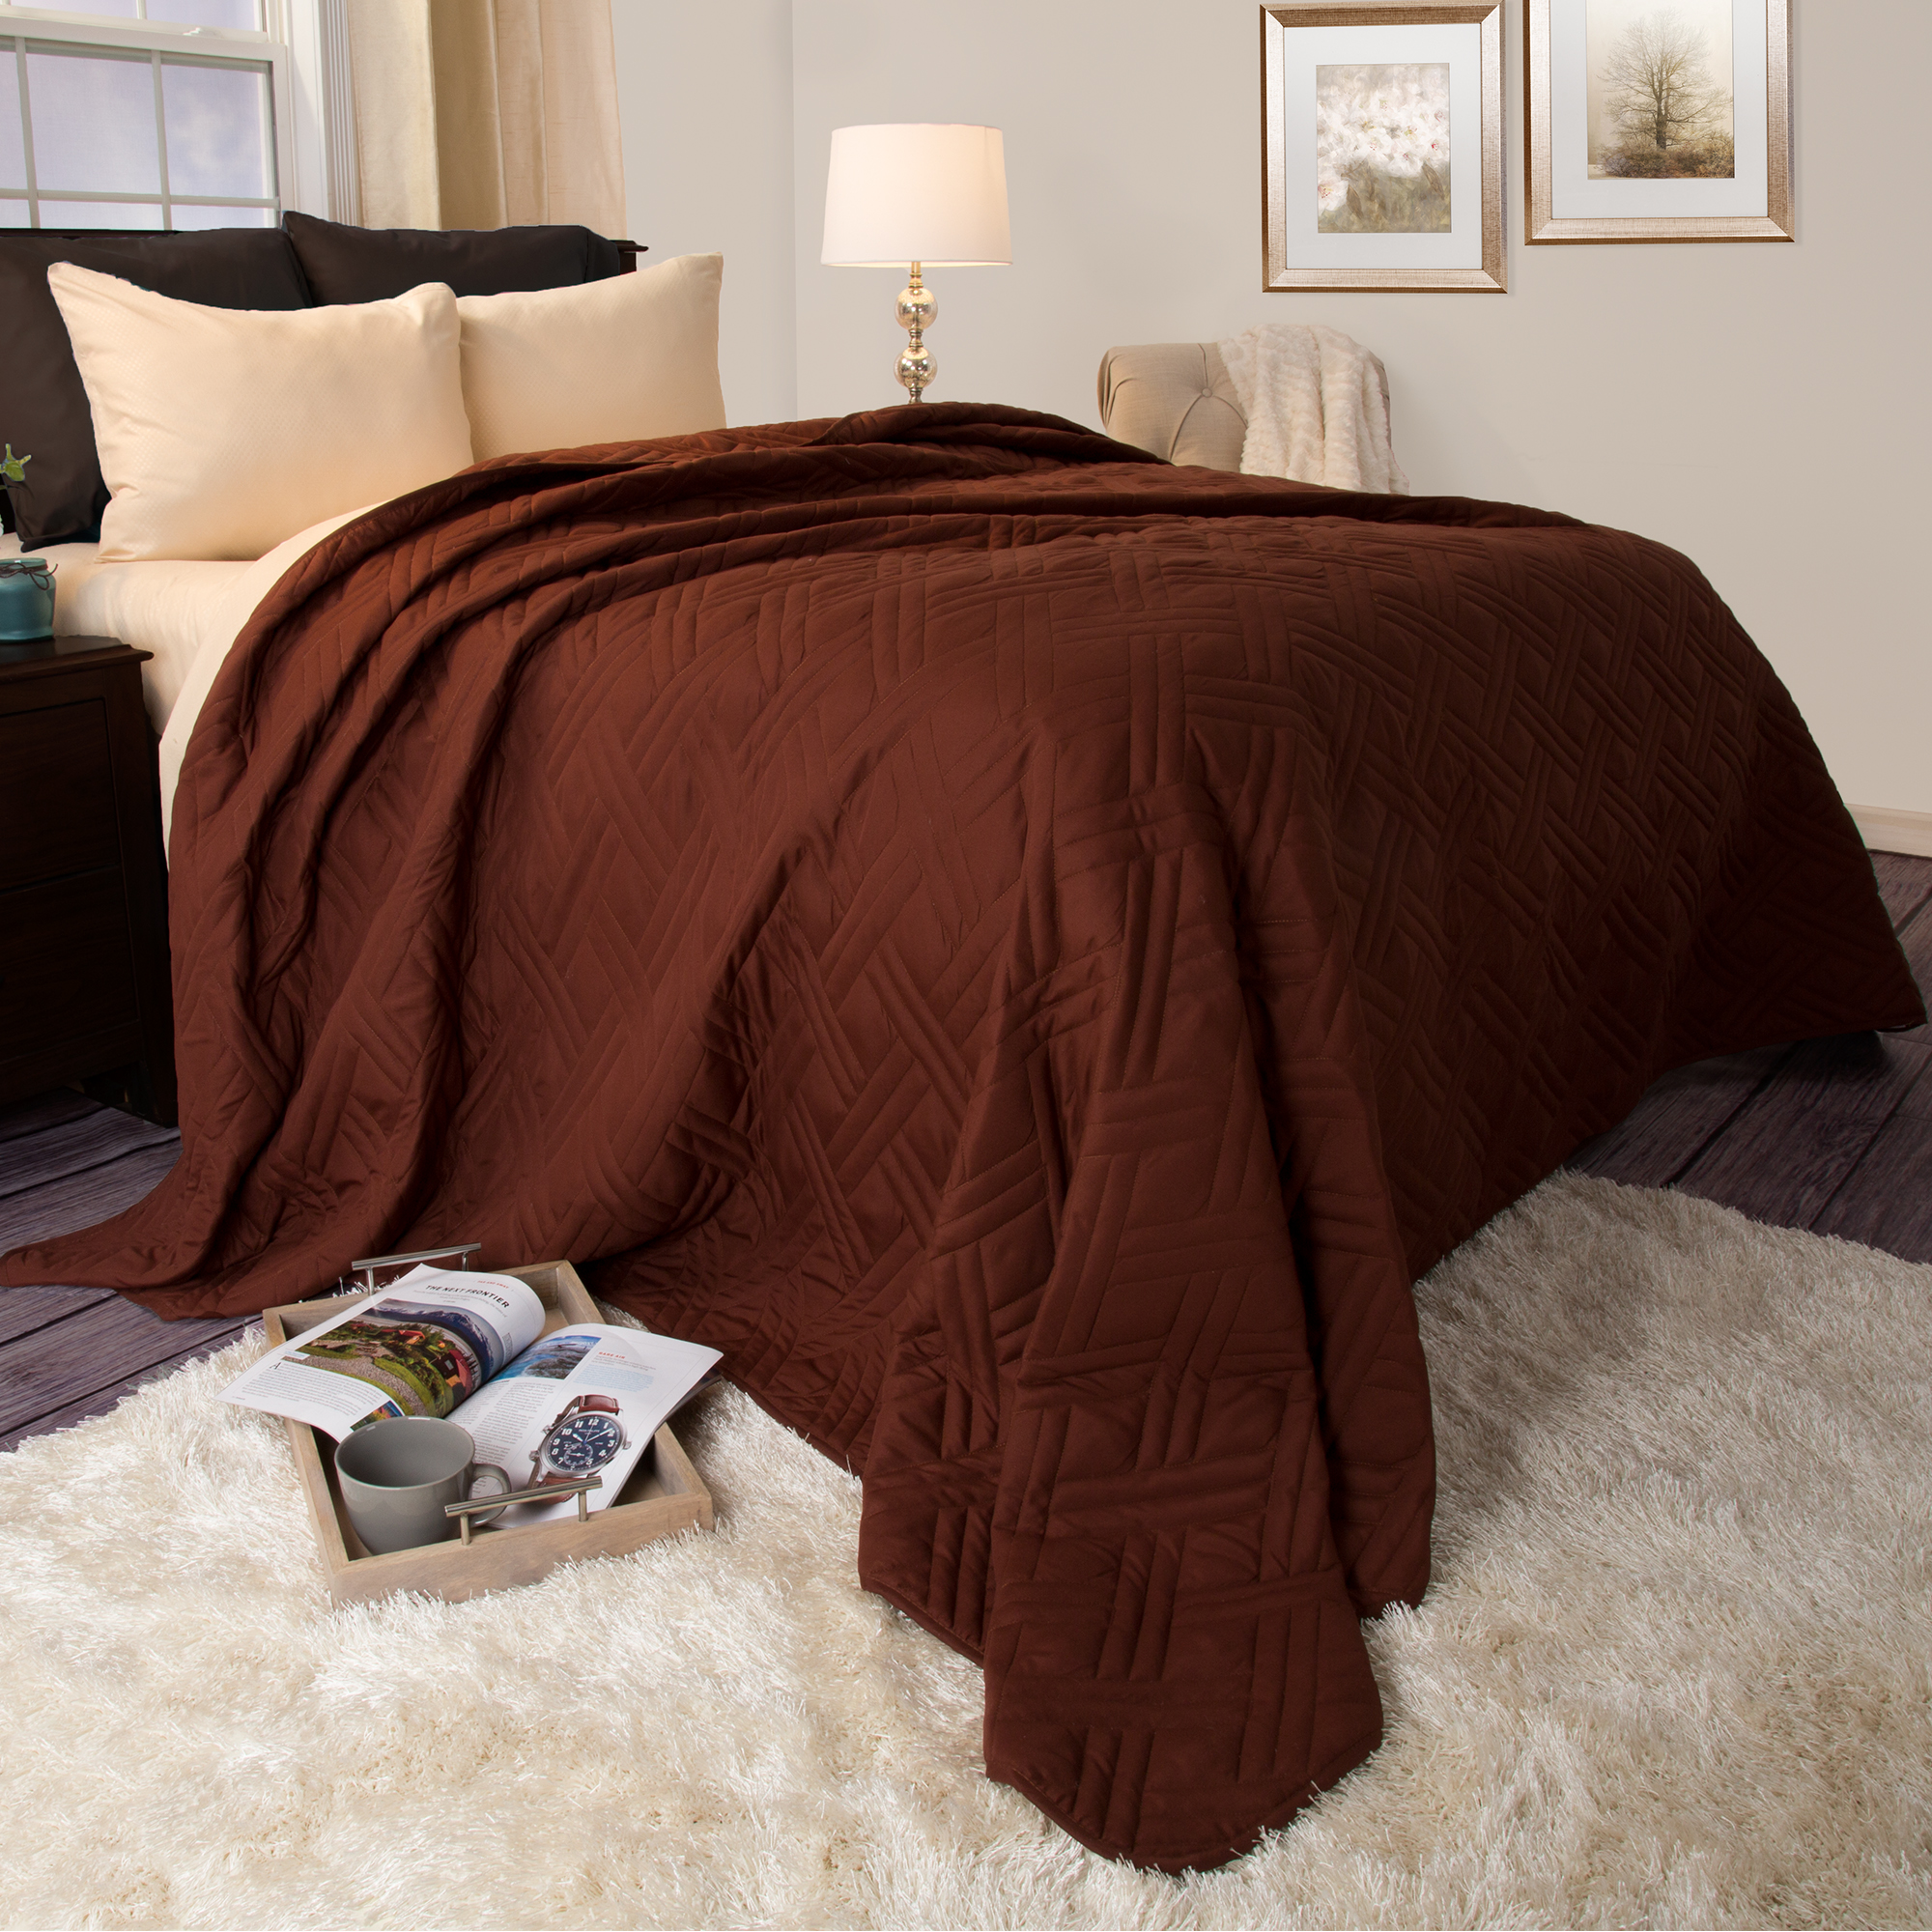 Somerset Home Solid Color Bed Quilt, King, Beige - image 1 of 3